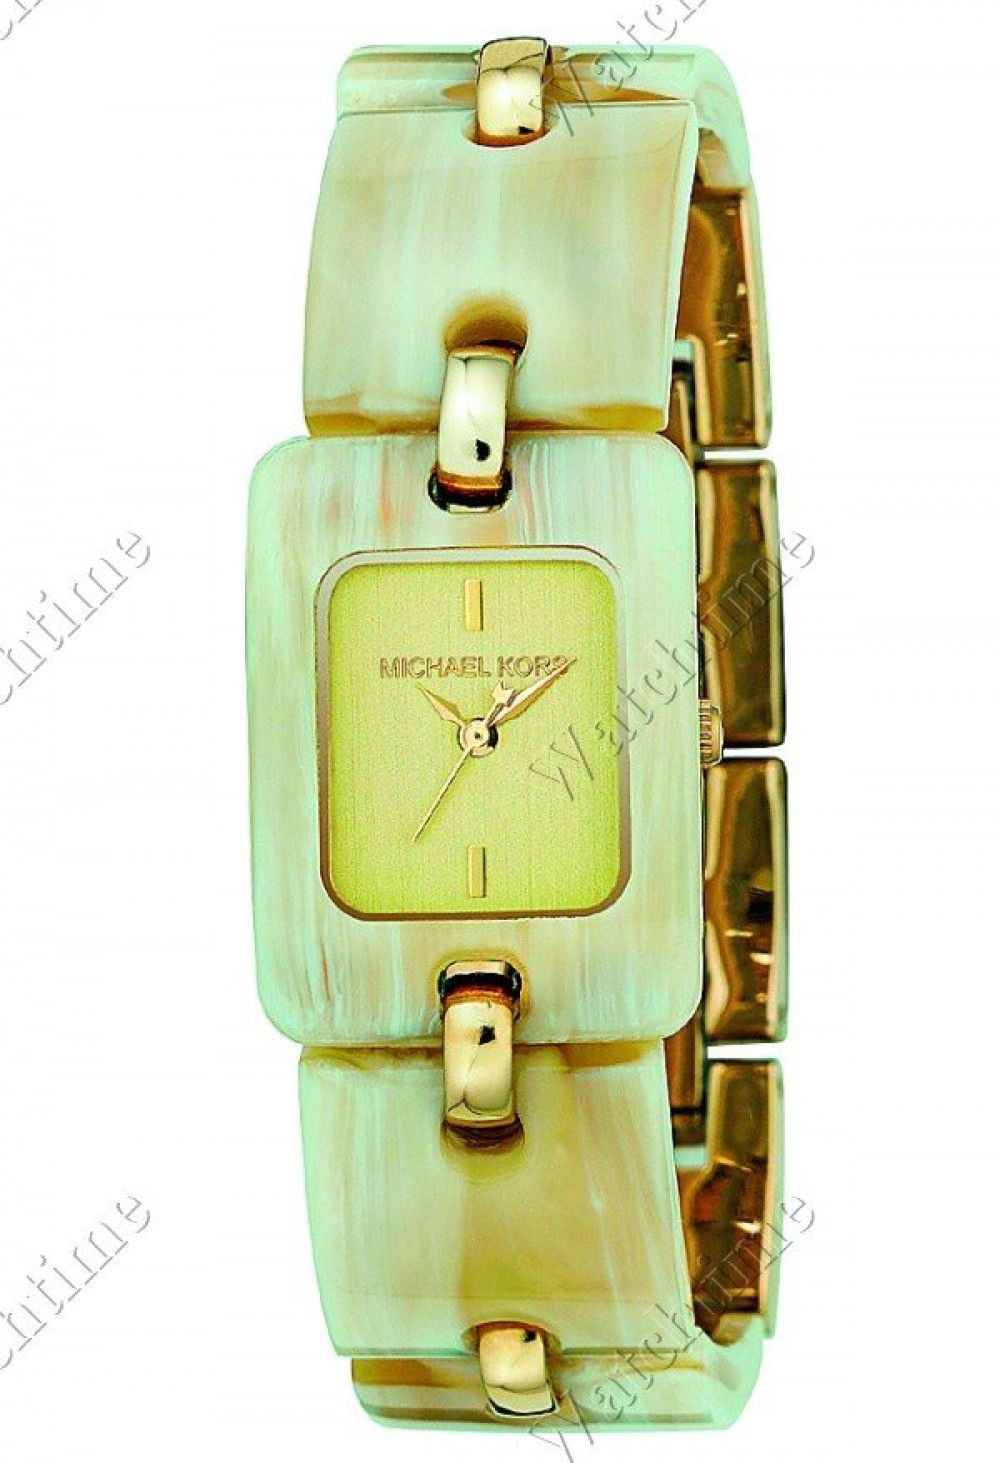 Zegarek firmy Michael Kors, model MK 4123